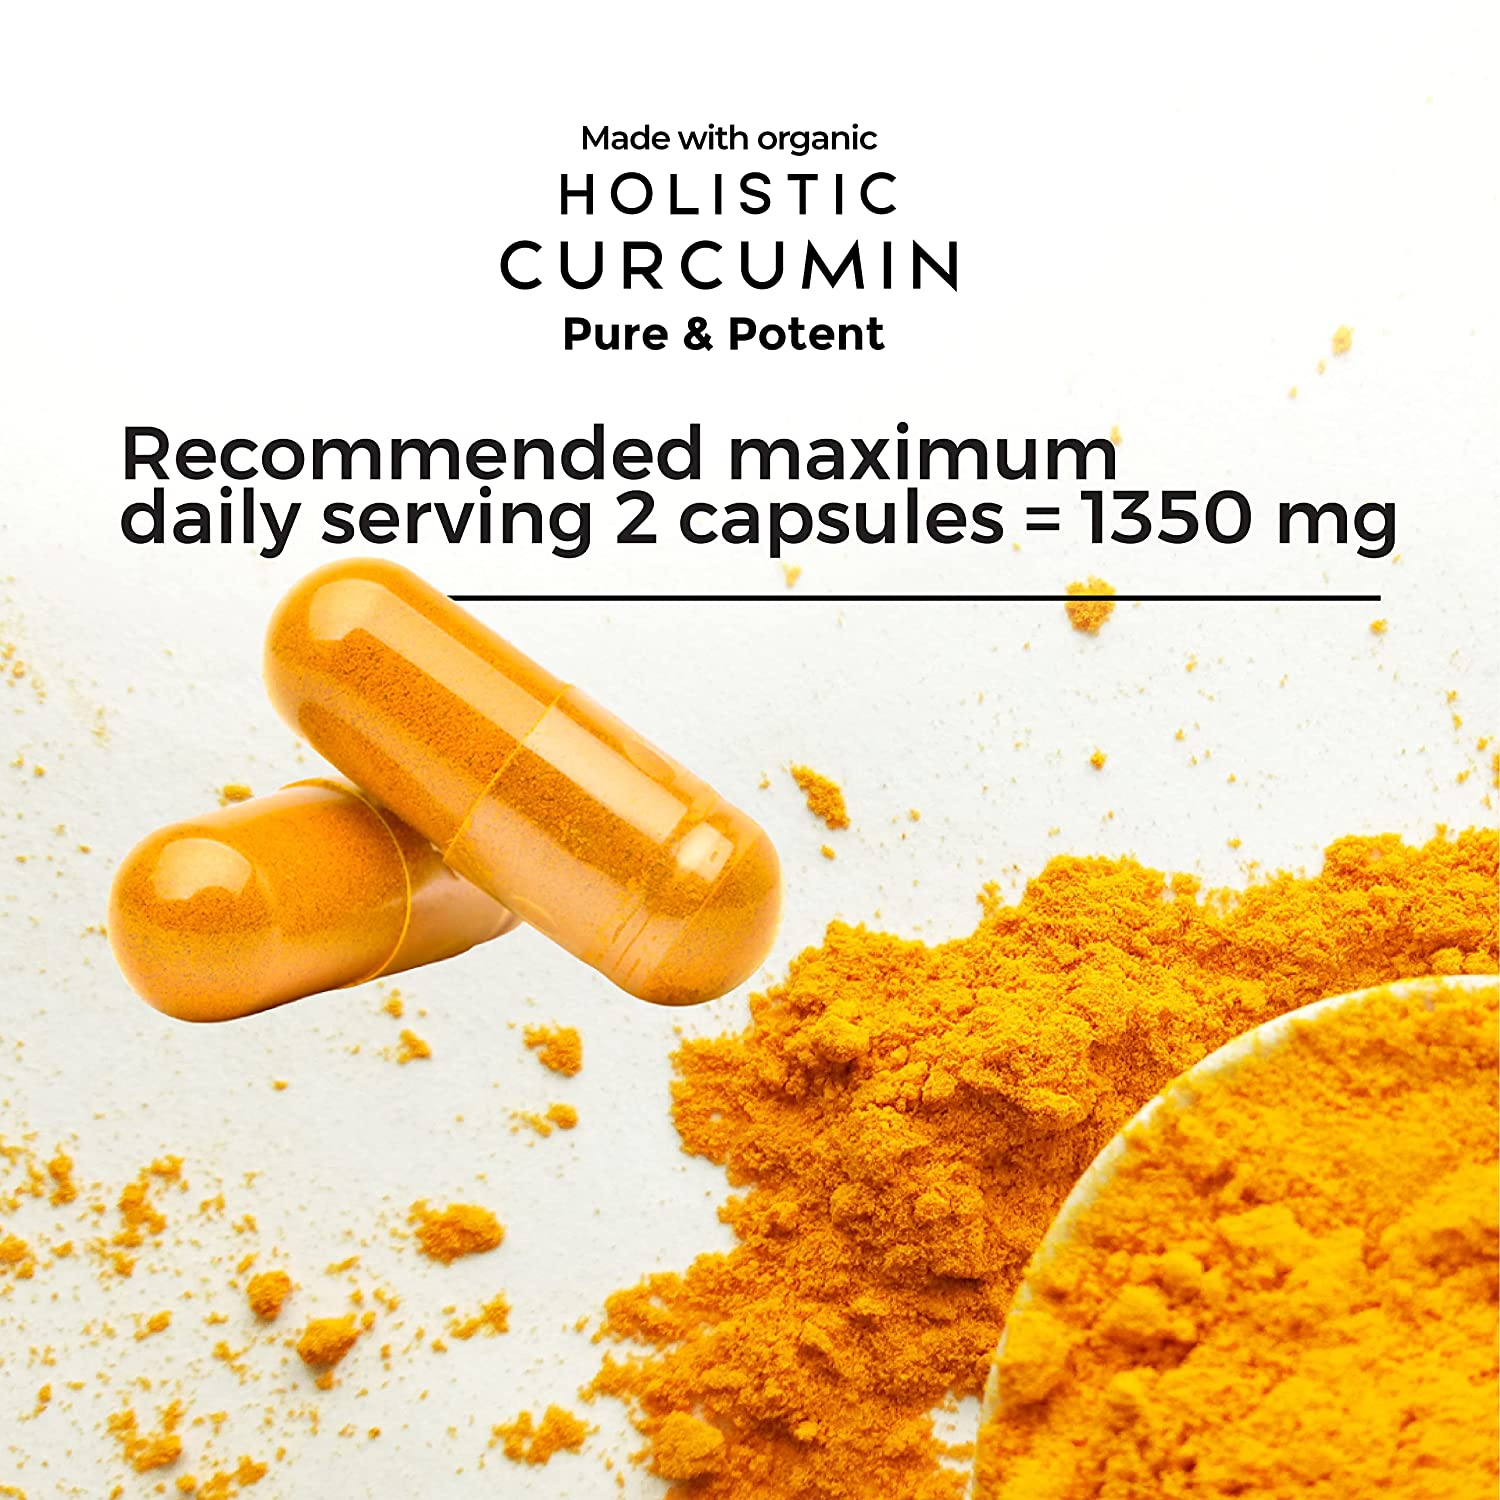 curcumin capsules dosage information